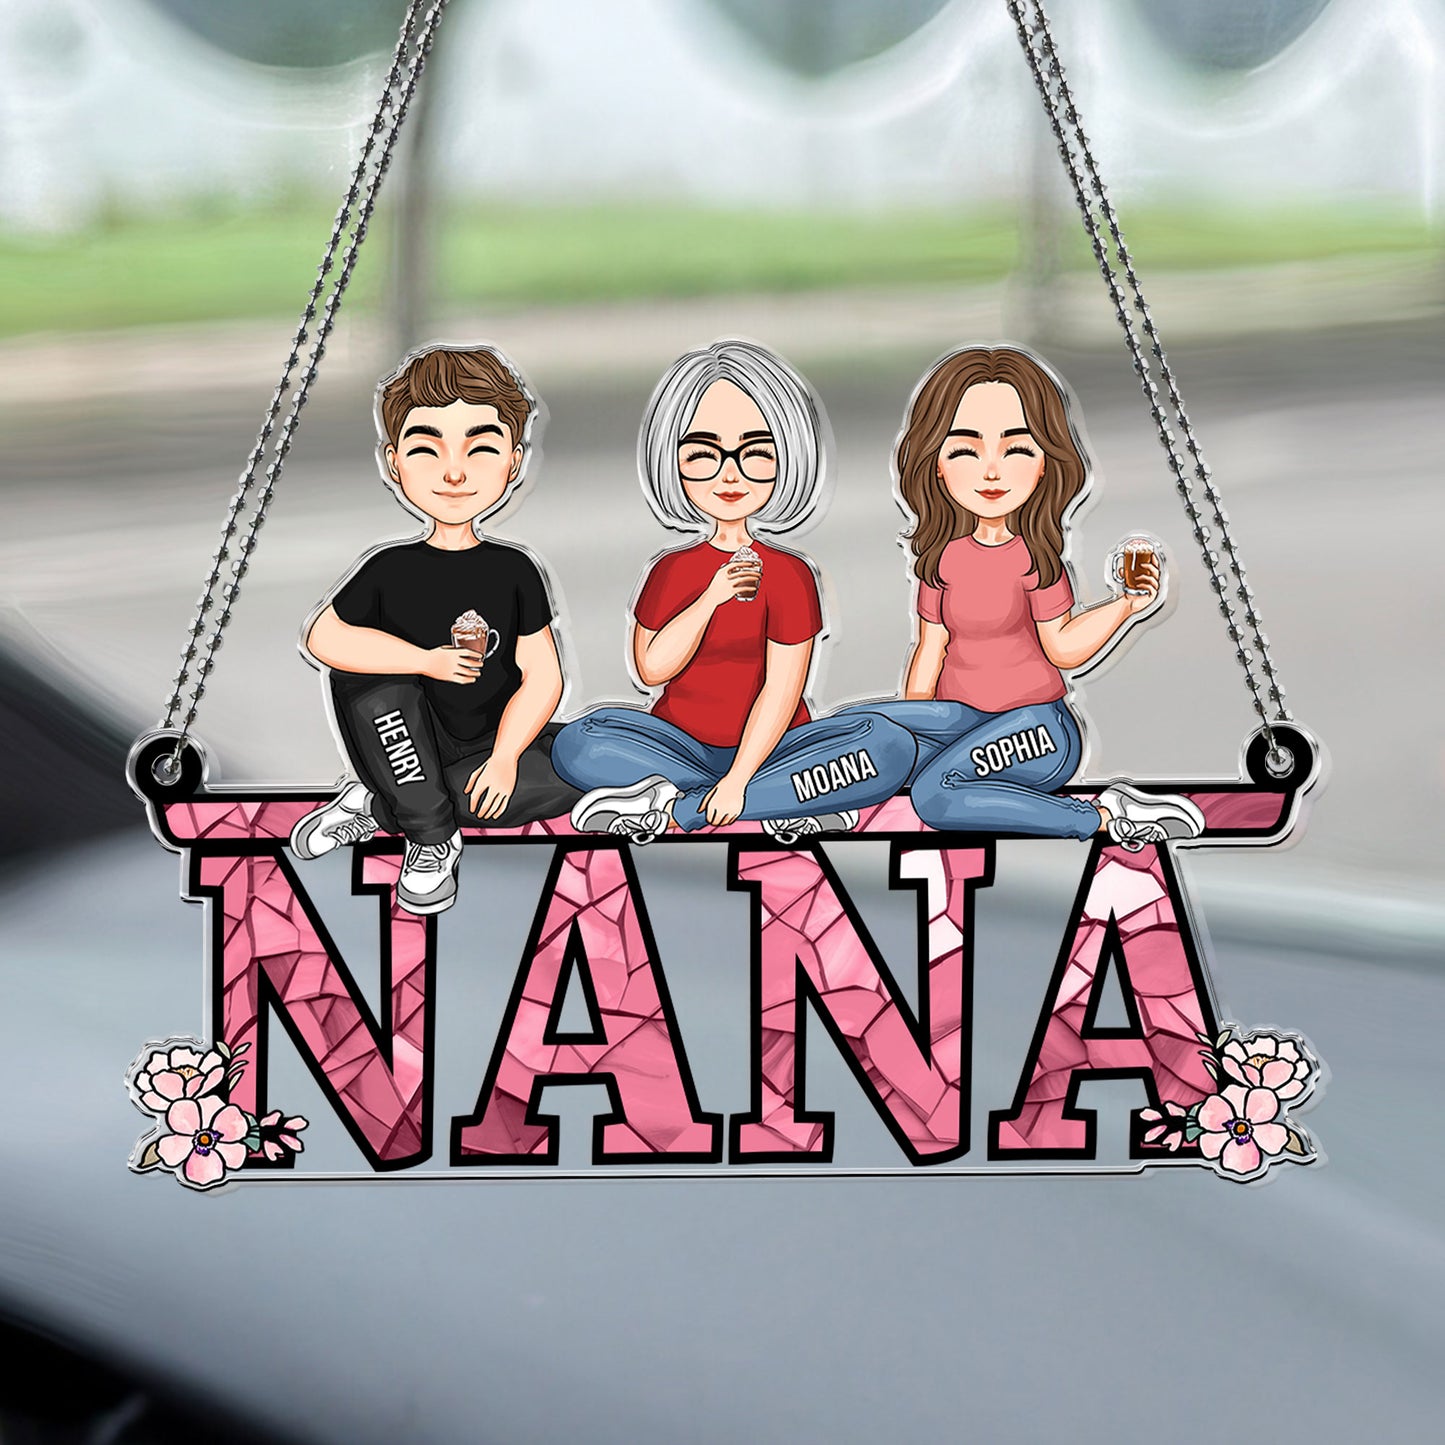 Nana - Children, Sitting Together - Personalized Car Ornament